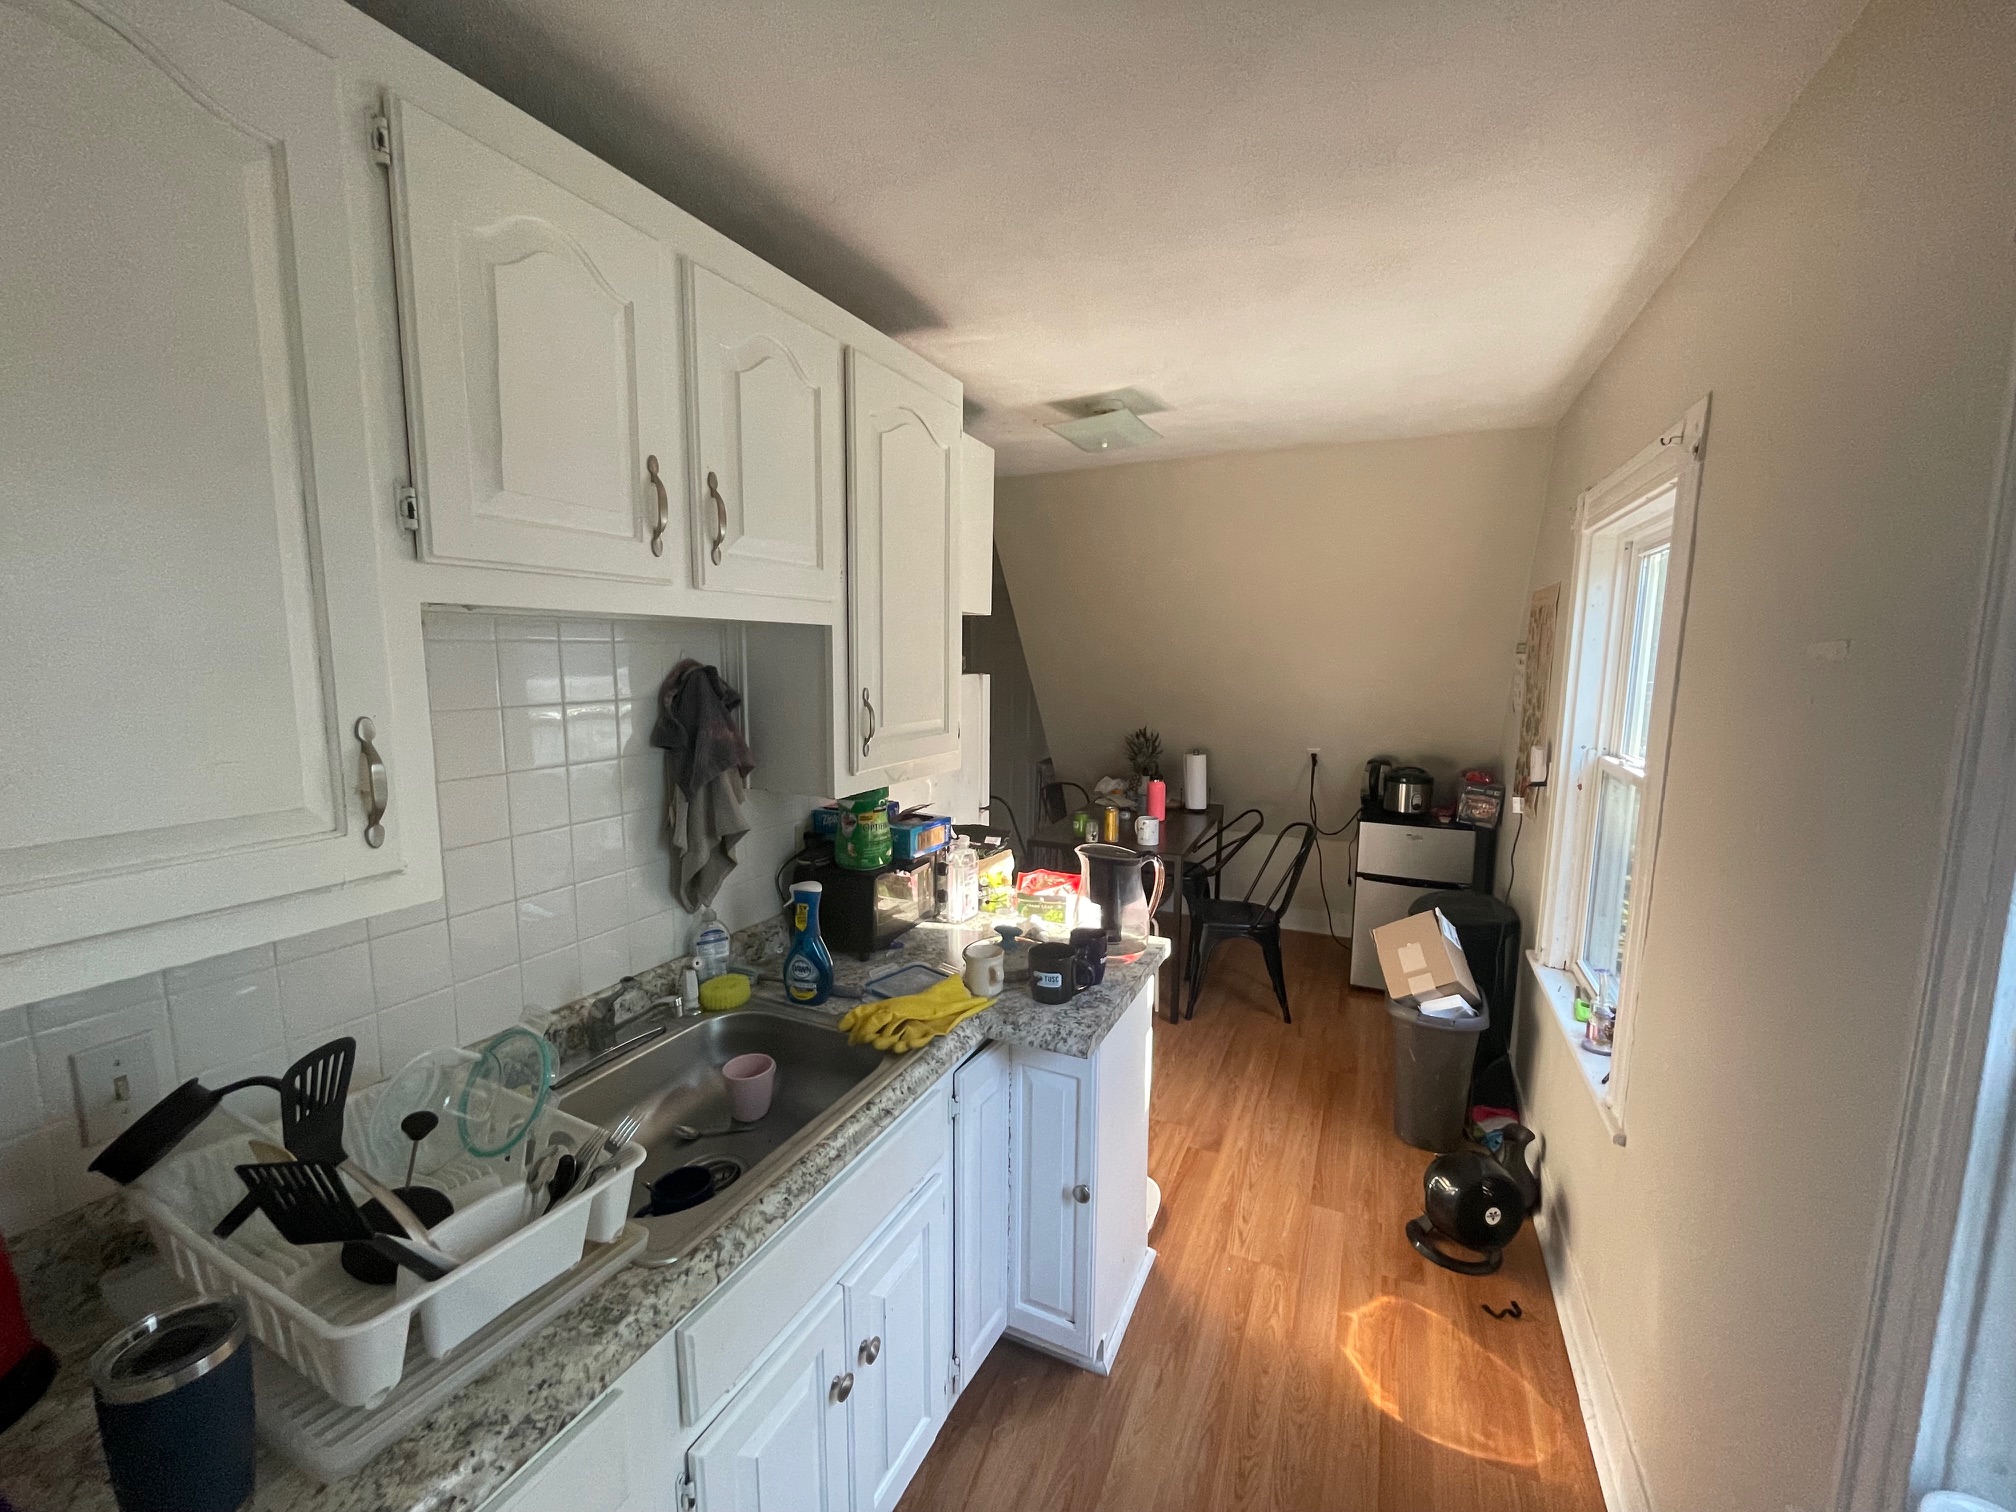 Photos of apartment on George,Medford MA 02155